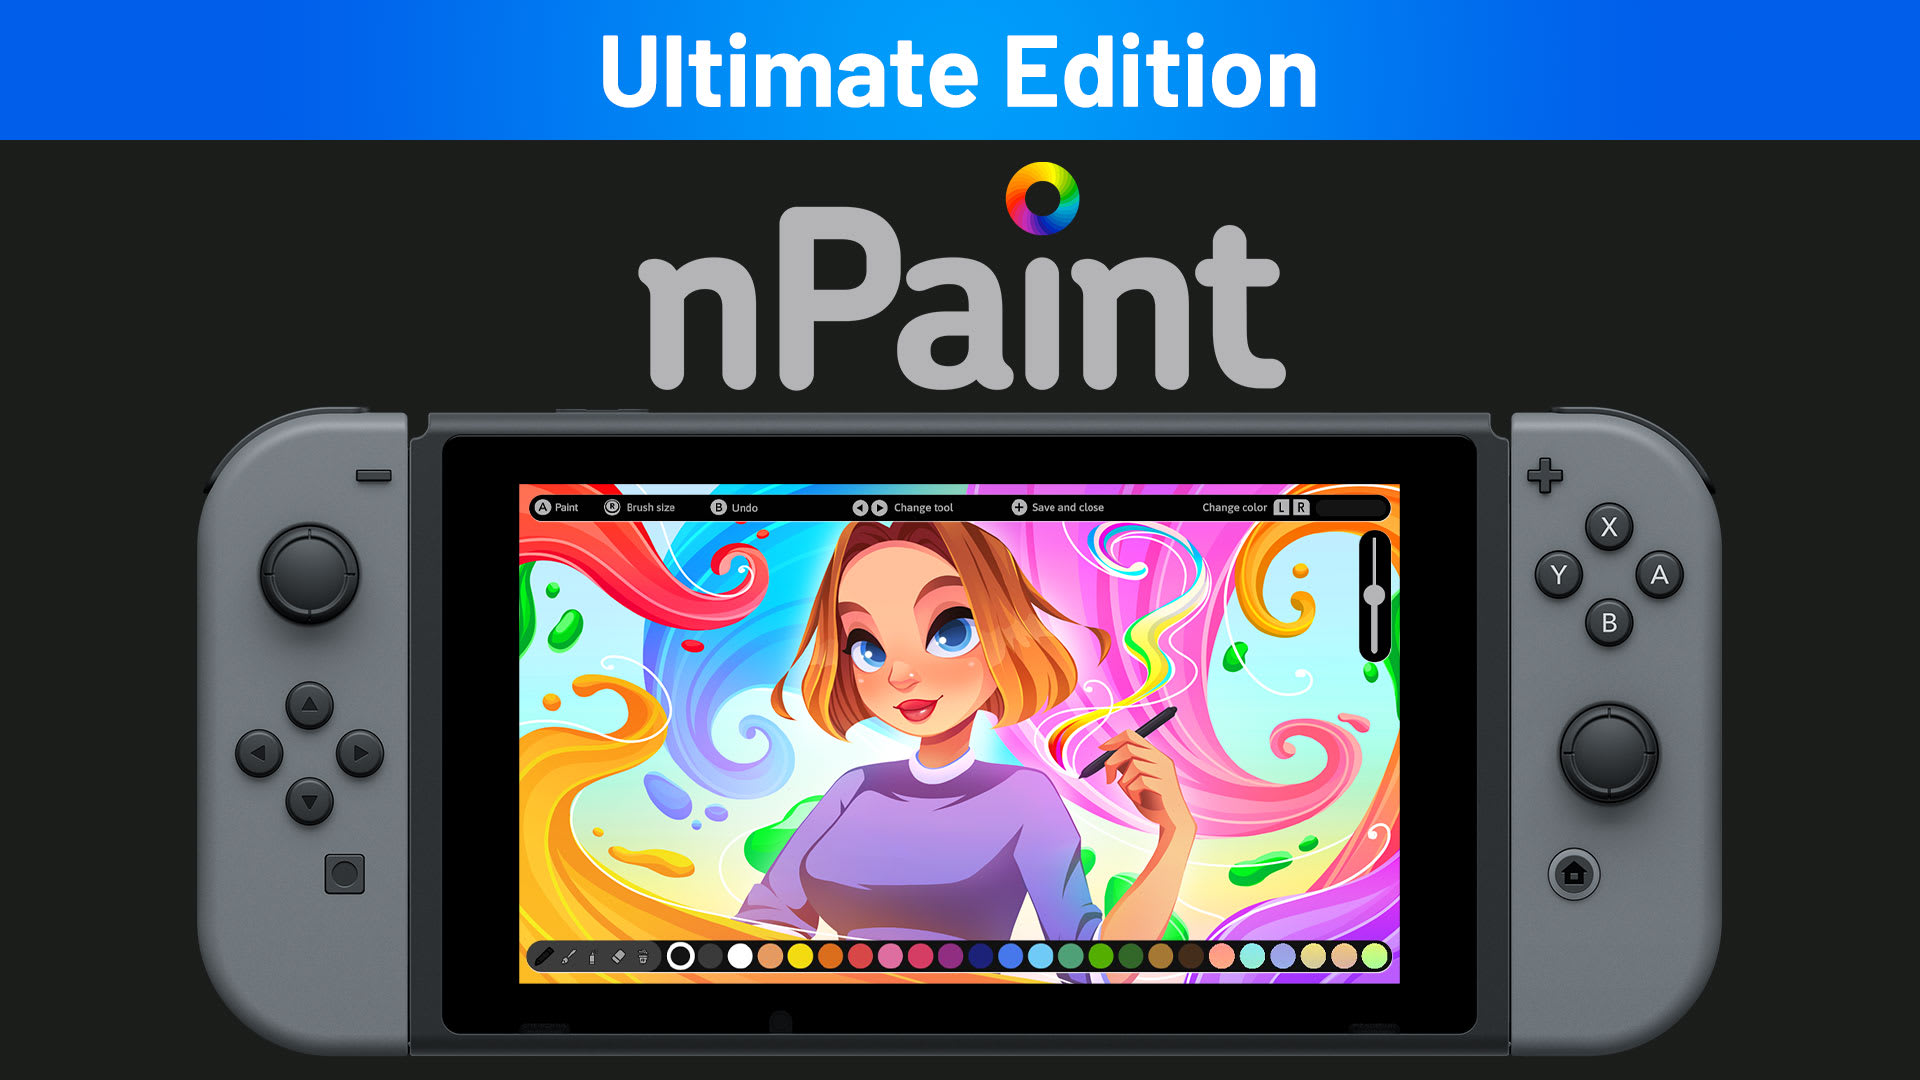 nPaint Ultimate Edition